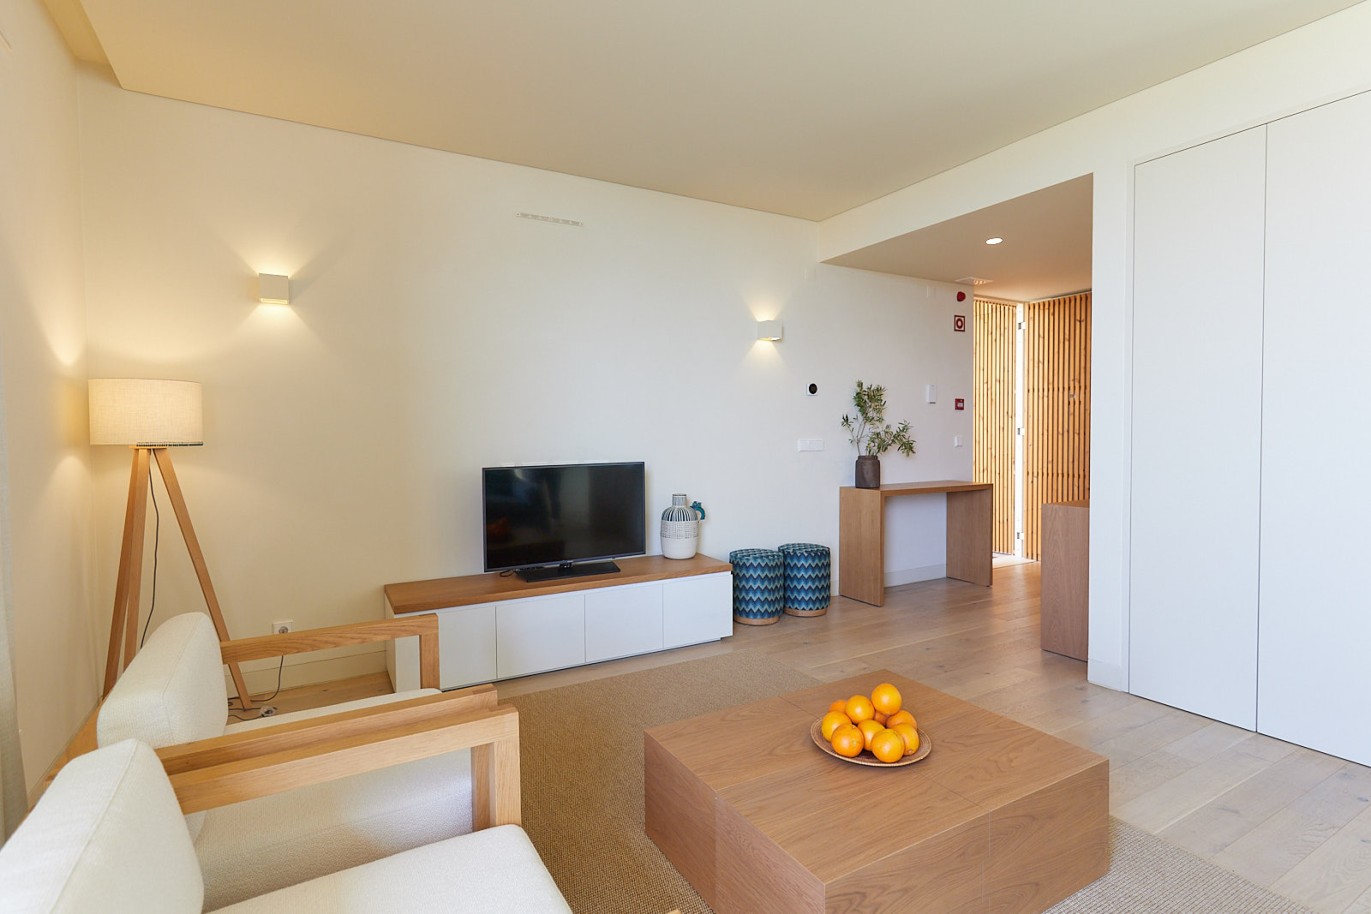 3 bedroom apartment in resort, for sale in Porches, Algarve_230741